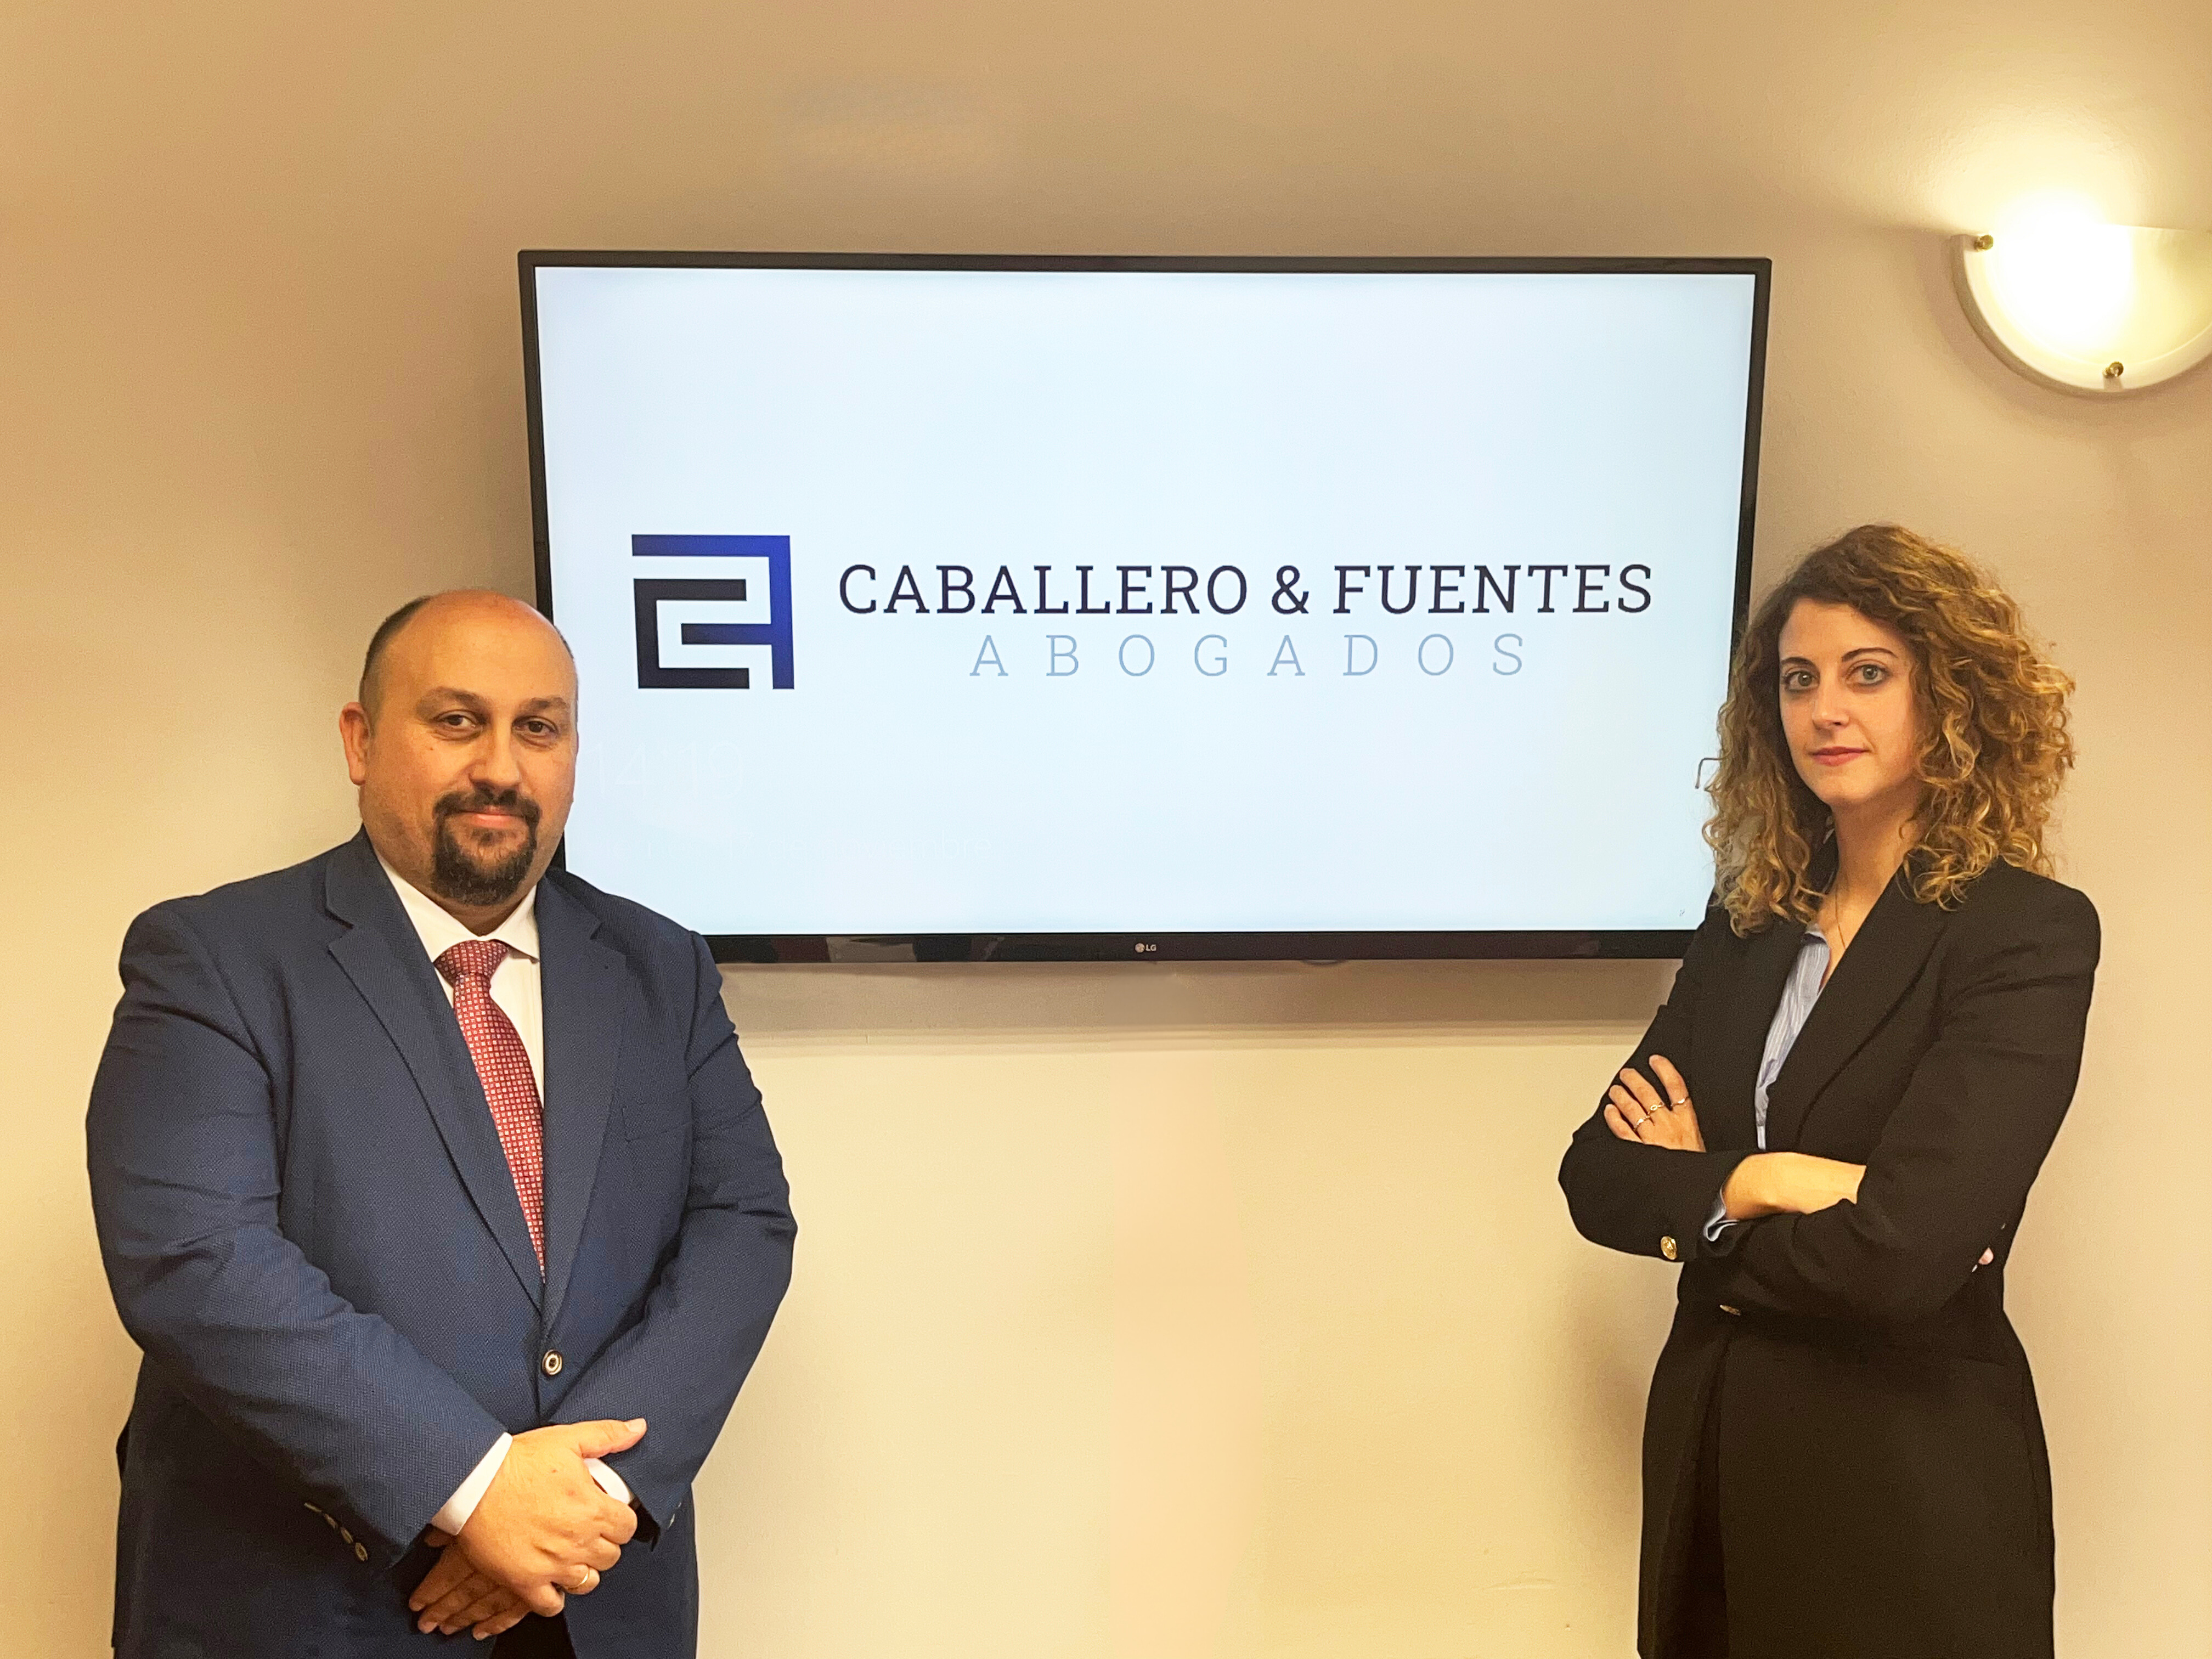 Caballero & Fuentes Abogados promociona a Lucía Muñoz como nueva socia responsable de Derecho Público